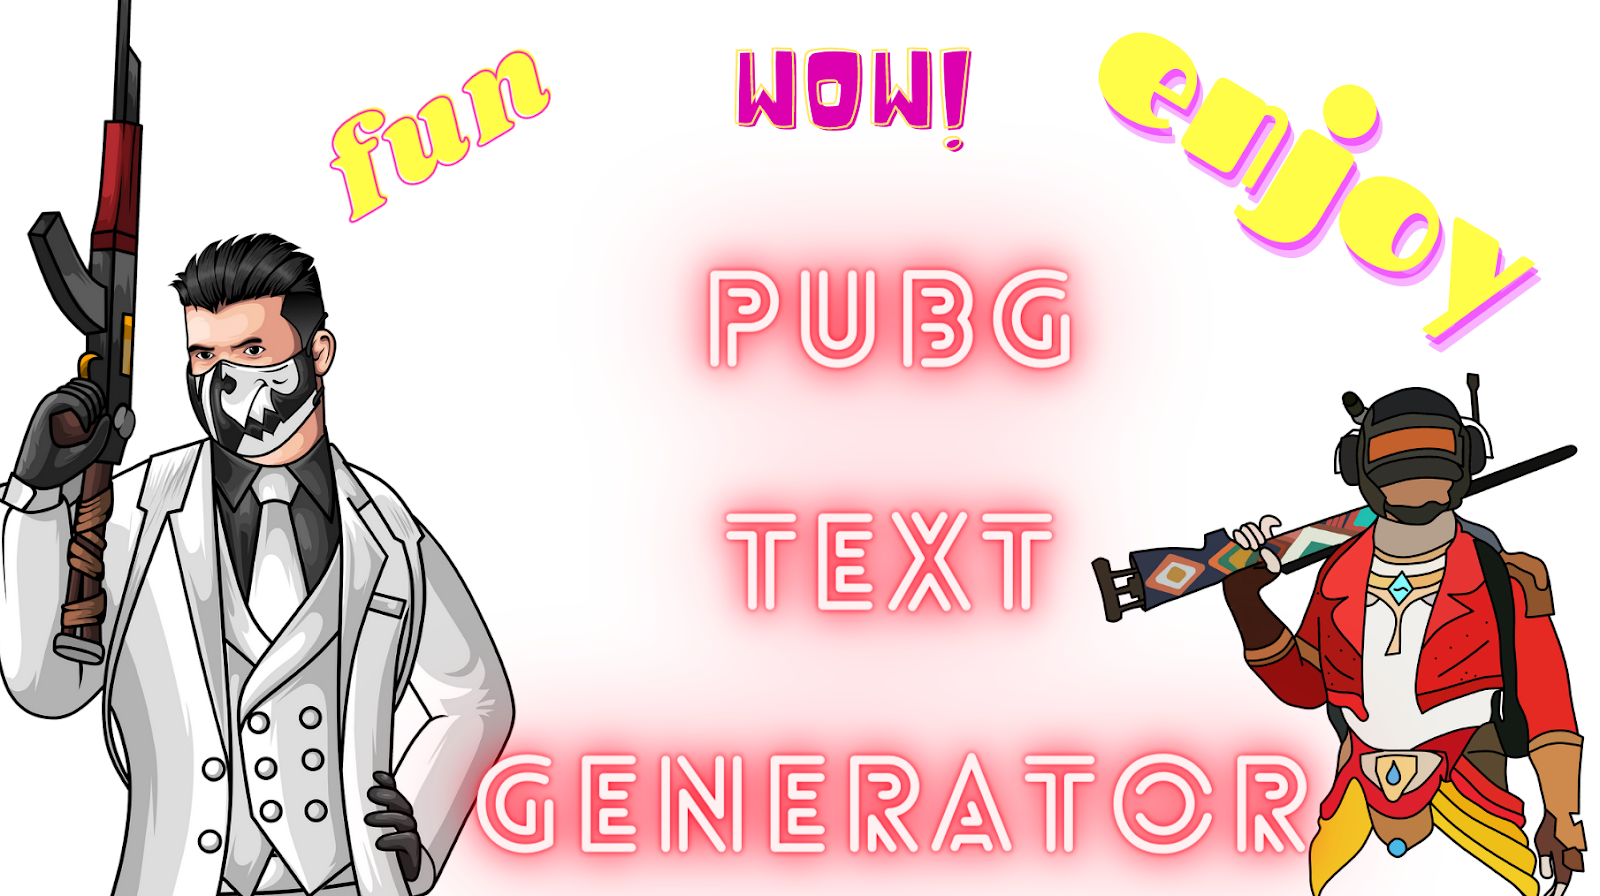 Pubg Stylish Text Generator ·︻デp̷u̷b̷g̷══━一 Fancy Text